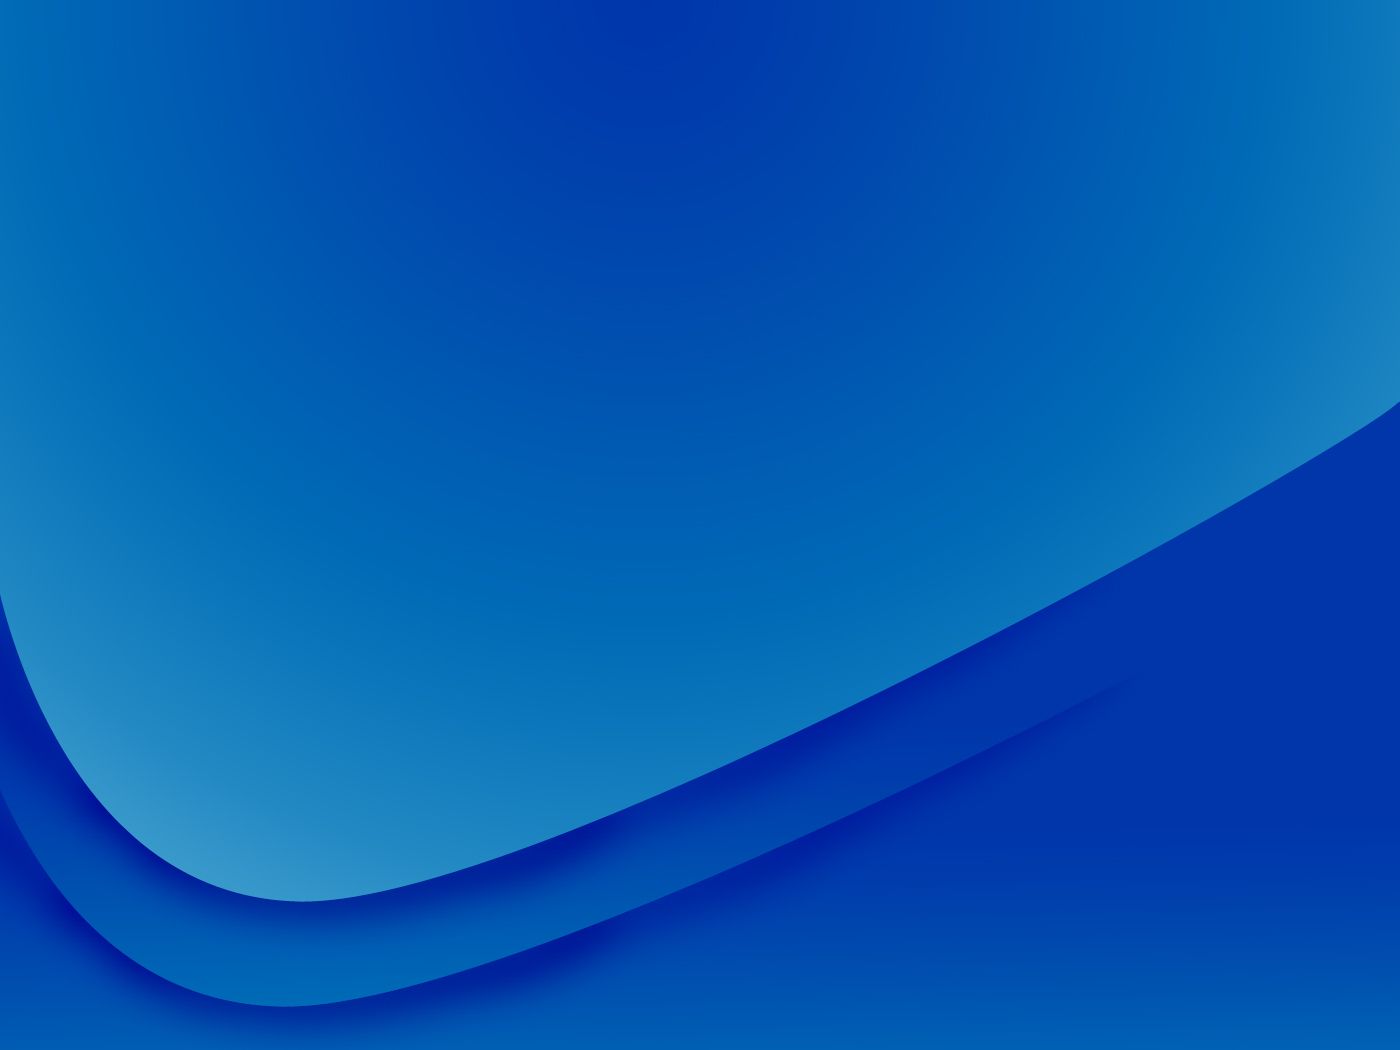 Free download XP wallpaper Computer wallpaper simple blue